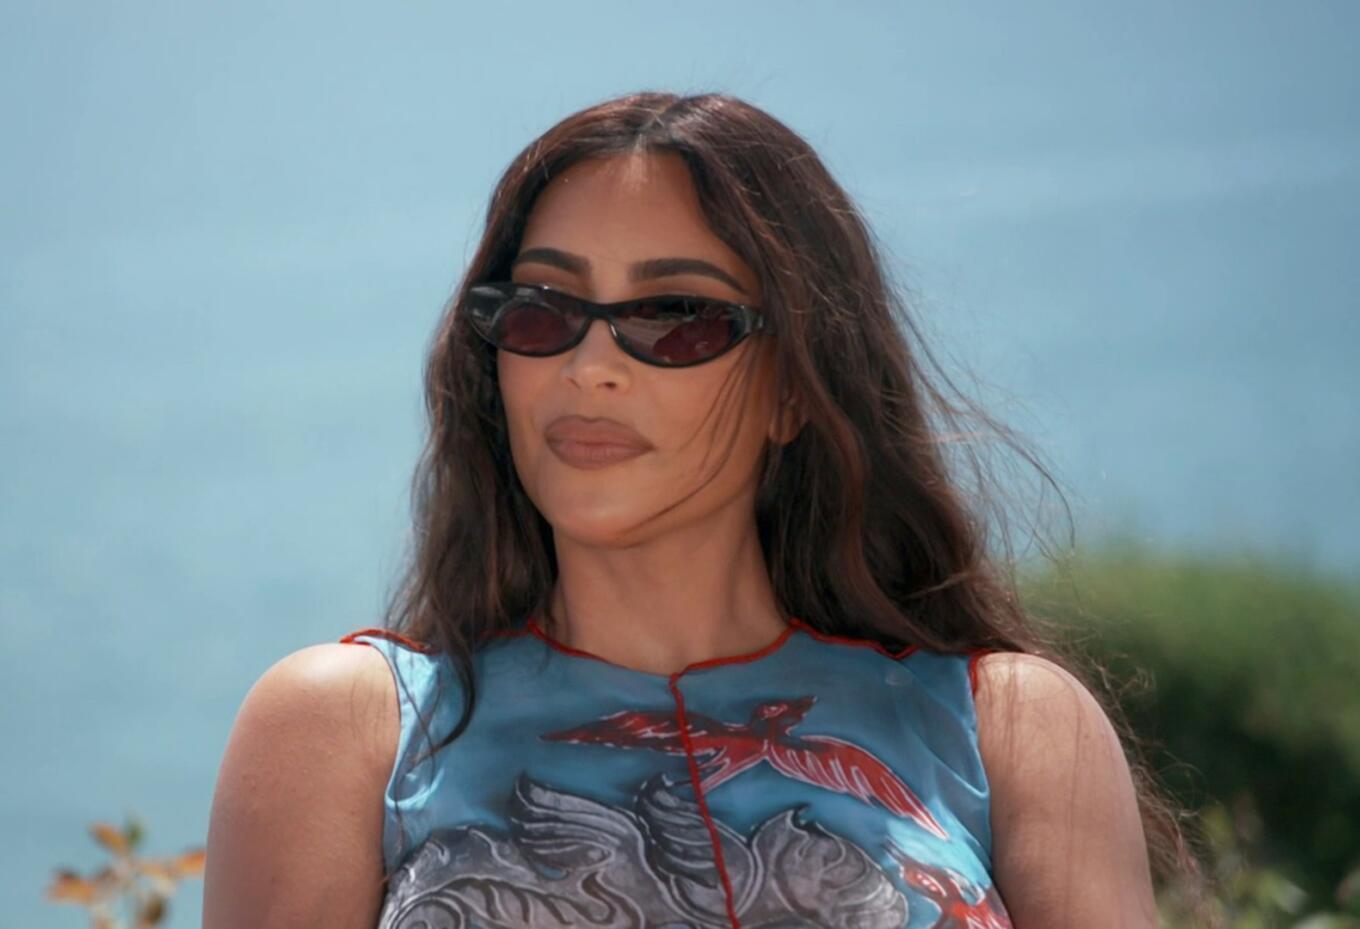 Kim Kardashian - Keeping Up With The Kardashians | Season 20 Episode 5 | Khloe Kardashian style